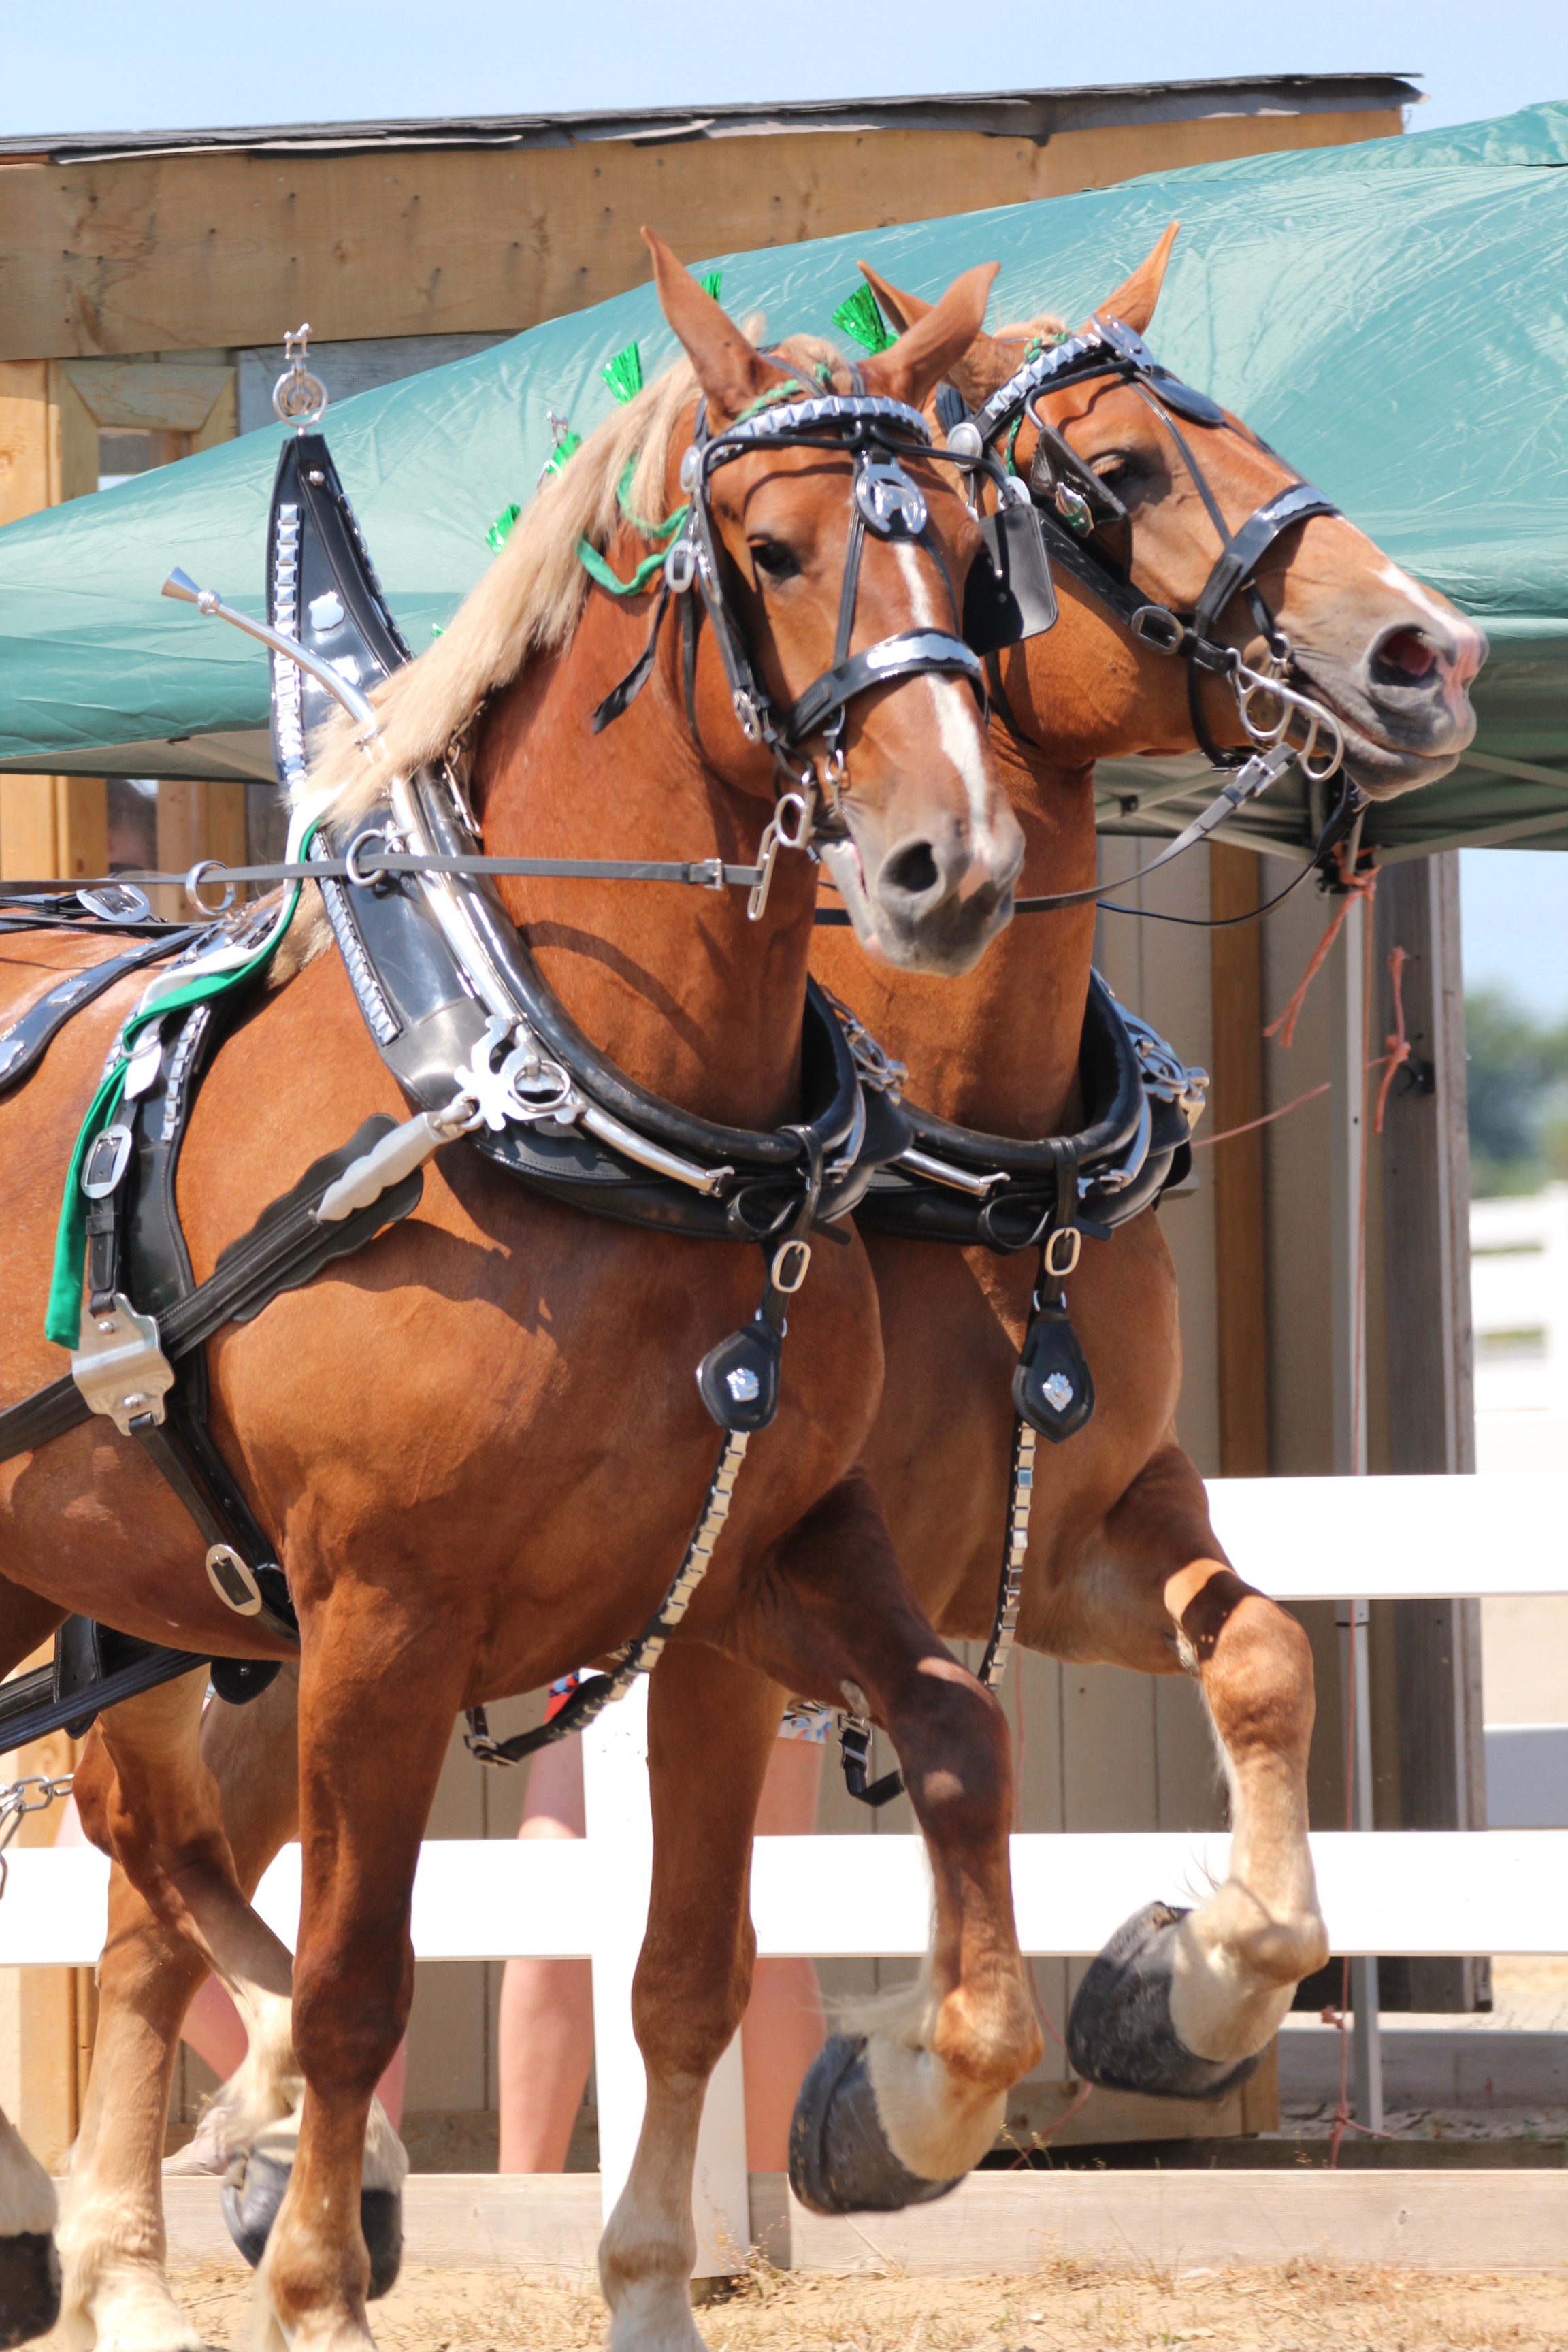 Two Belgian Draft horses in harness.